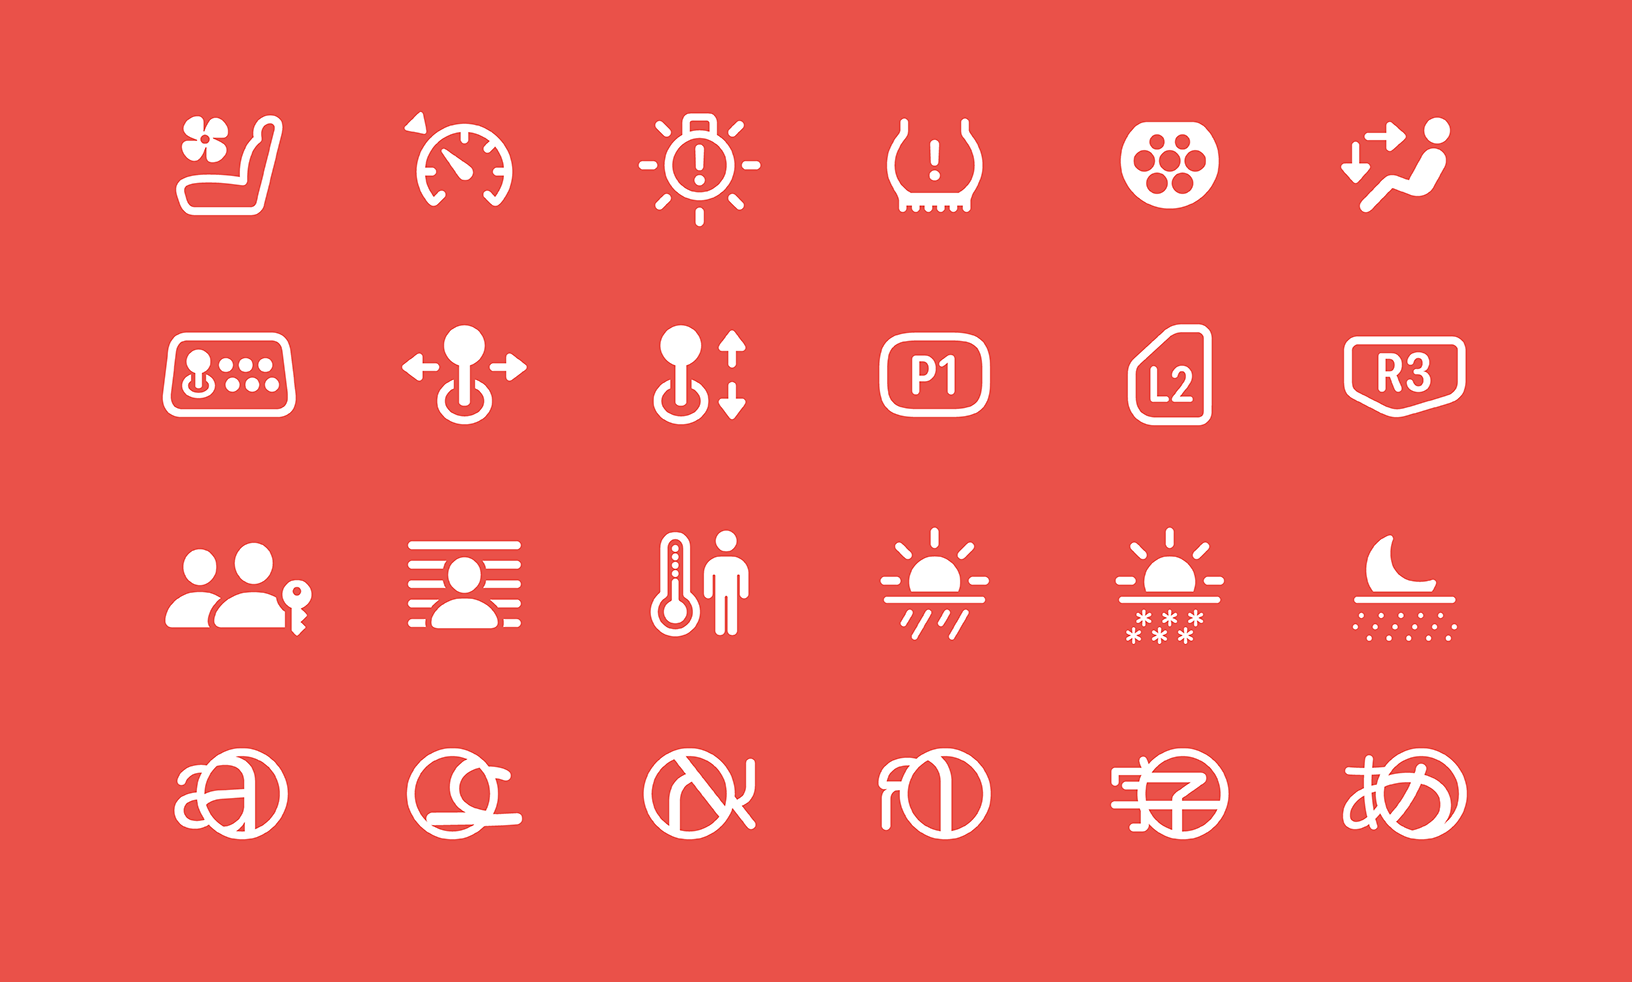 Sample grid of new symbols in white.